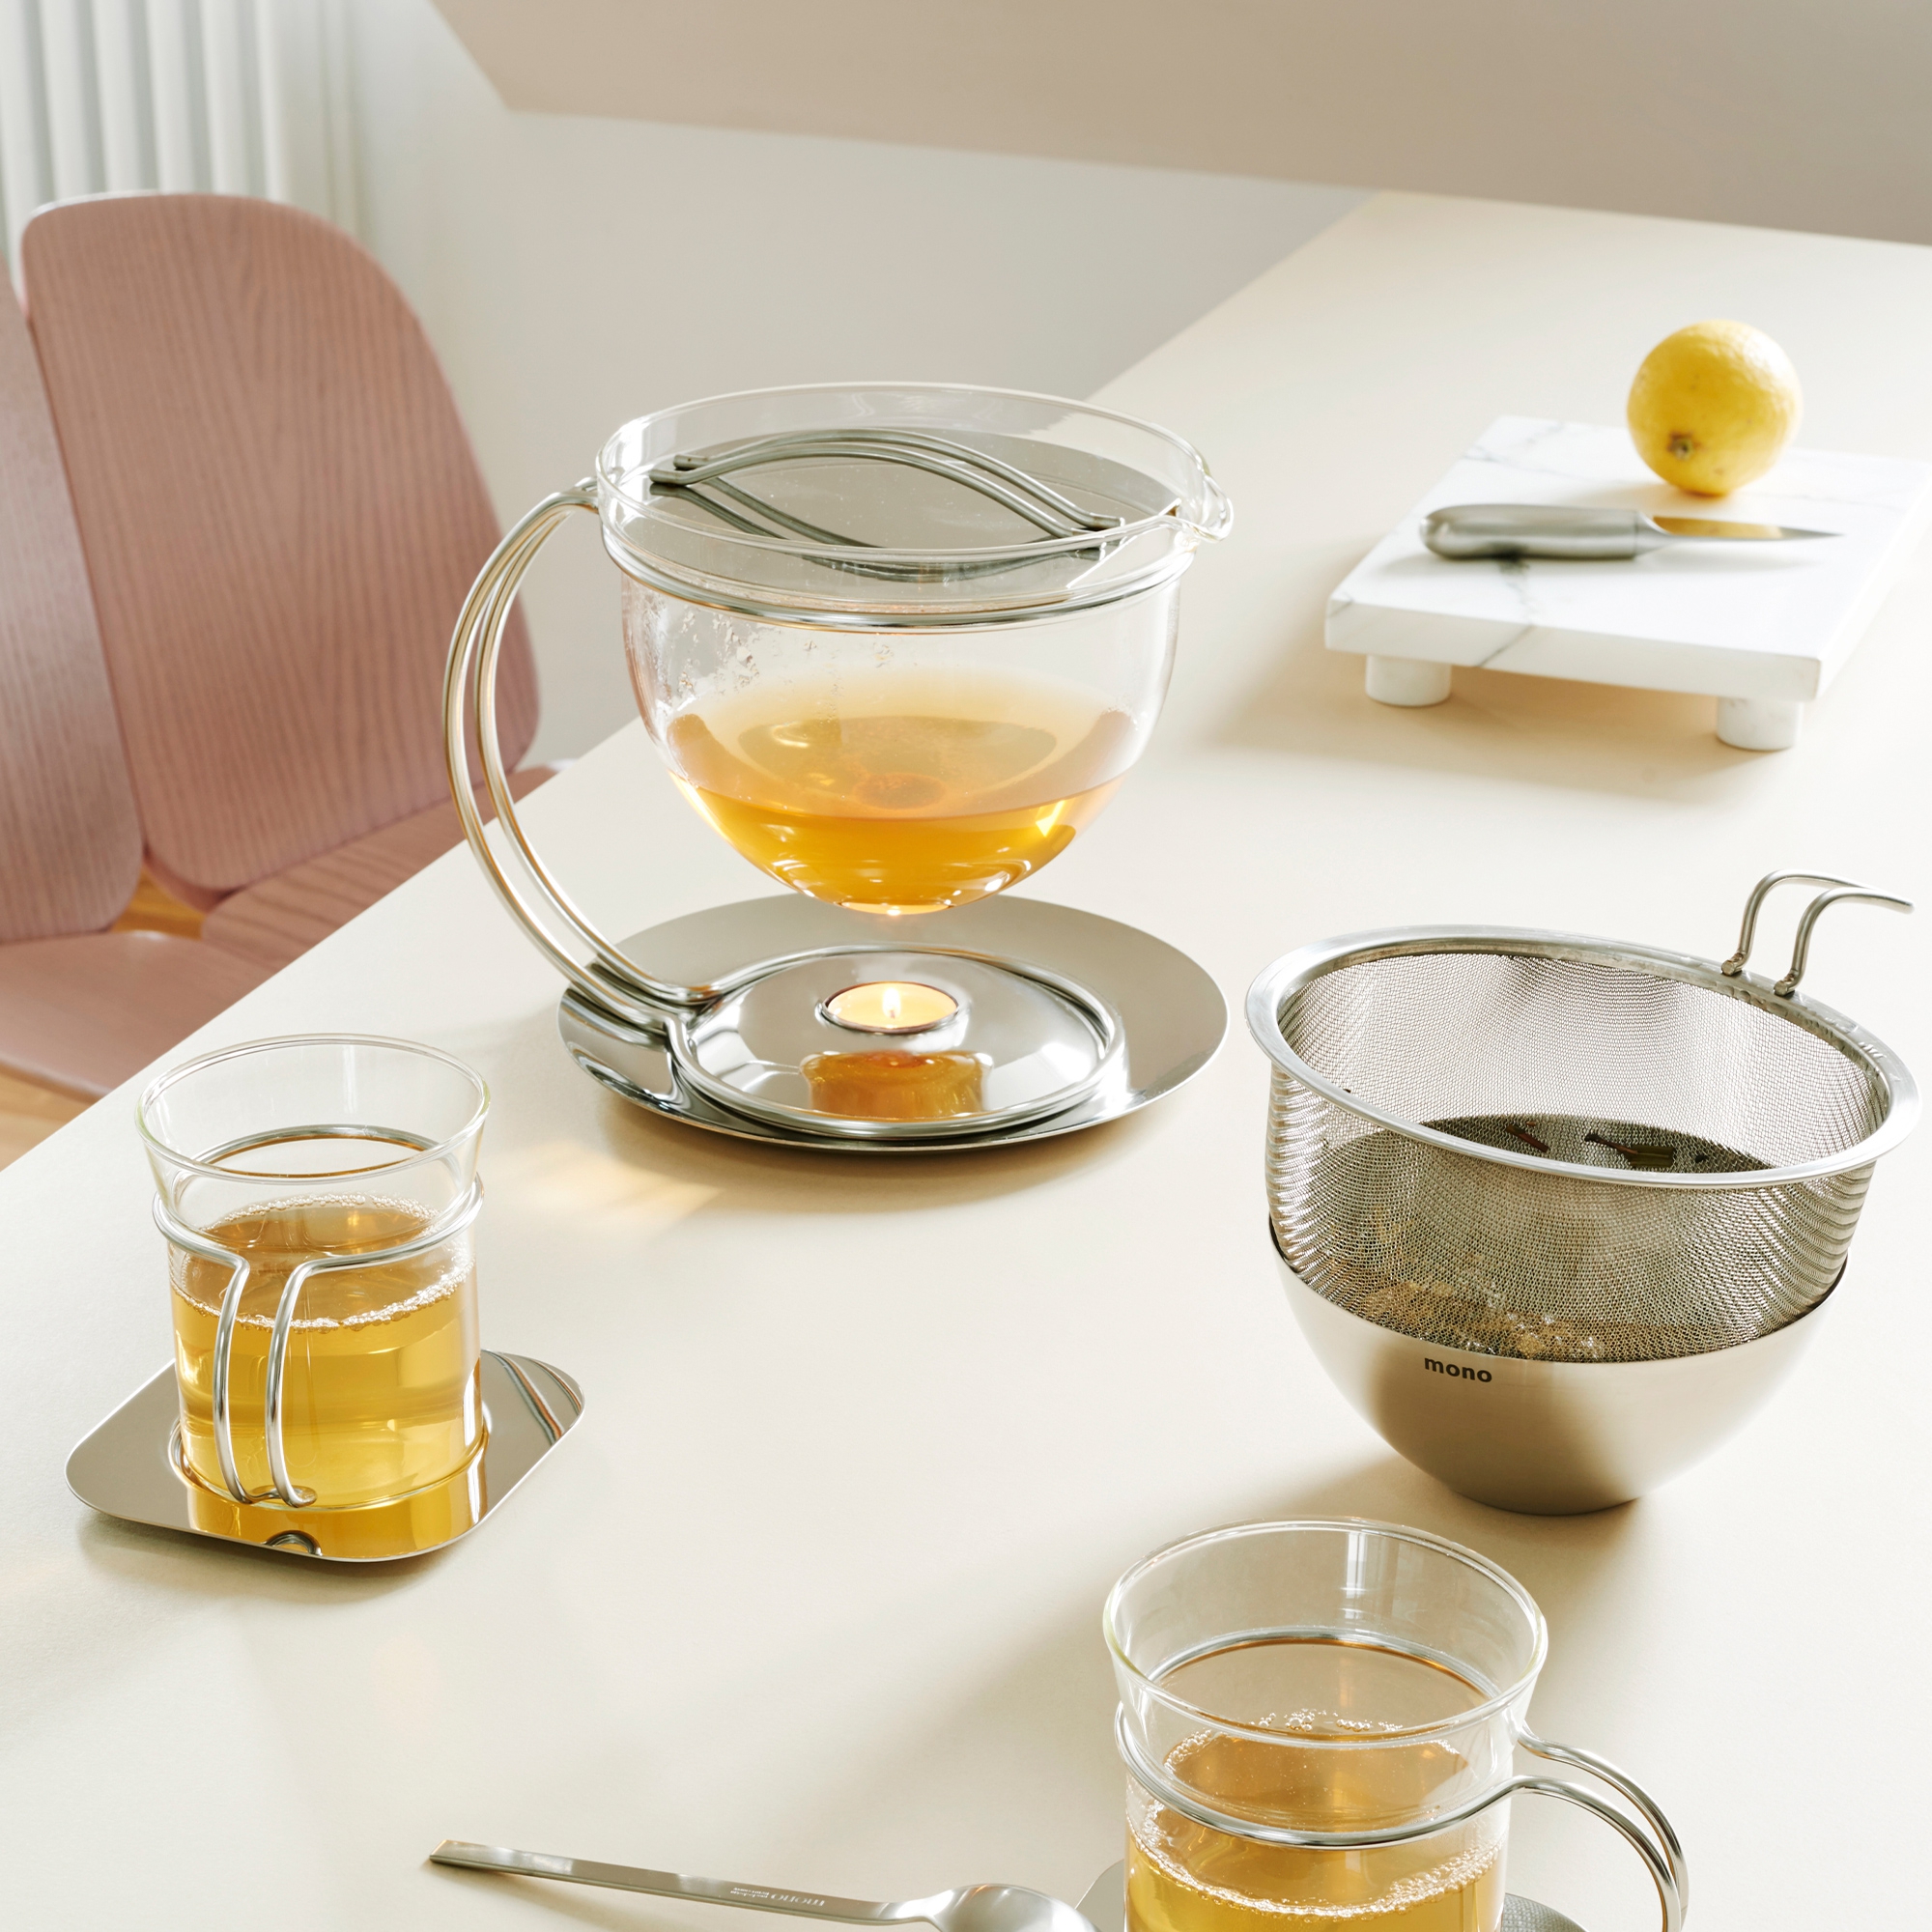 mono - filio teacup with saucer